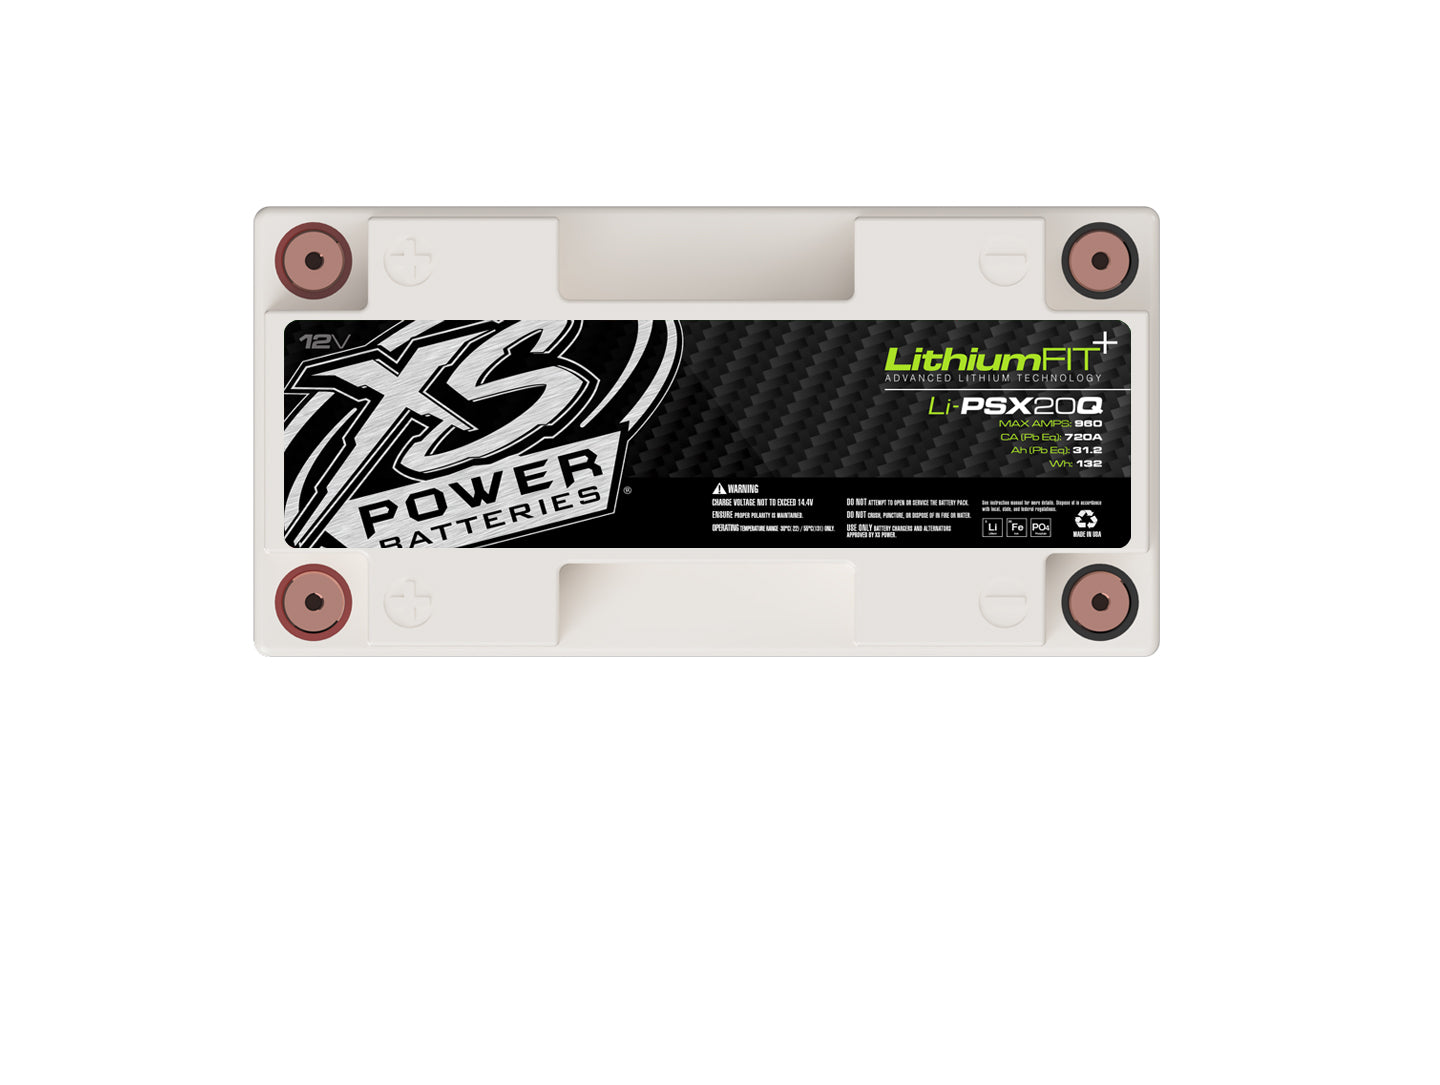 Li-PSX20Q XS Power 12VDC Lithium Powersports Vehicle Battery 960A 10.4Ah Group 20L